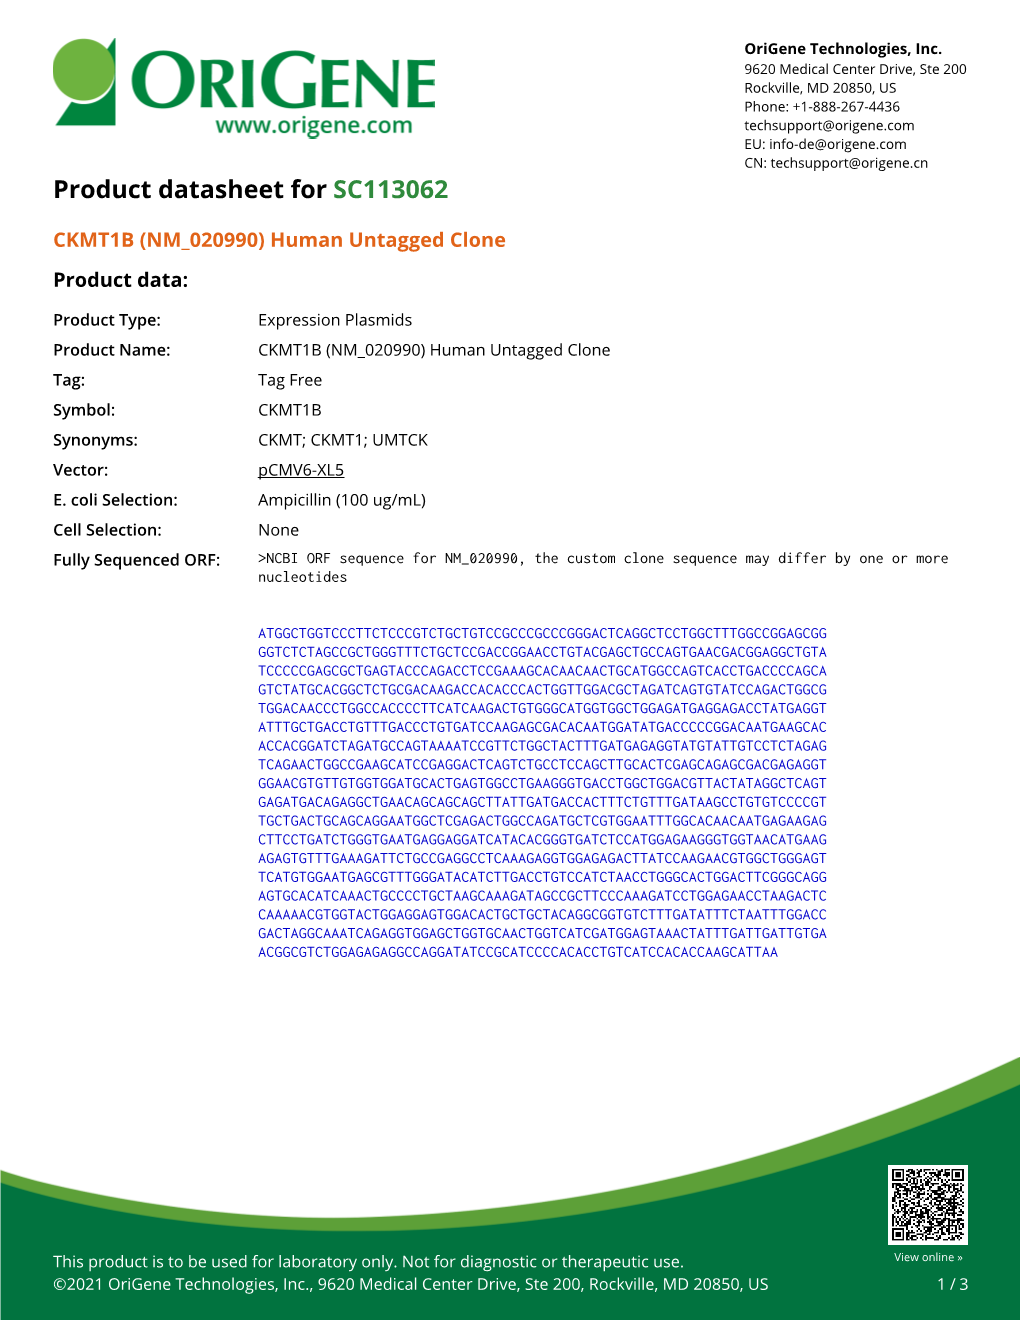 CKMT1B (NM 020990) Human Untagged Clone – SC113062